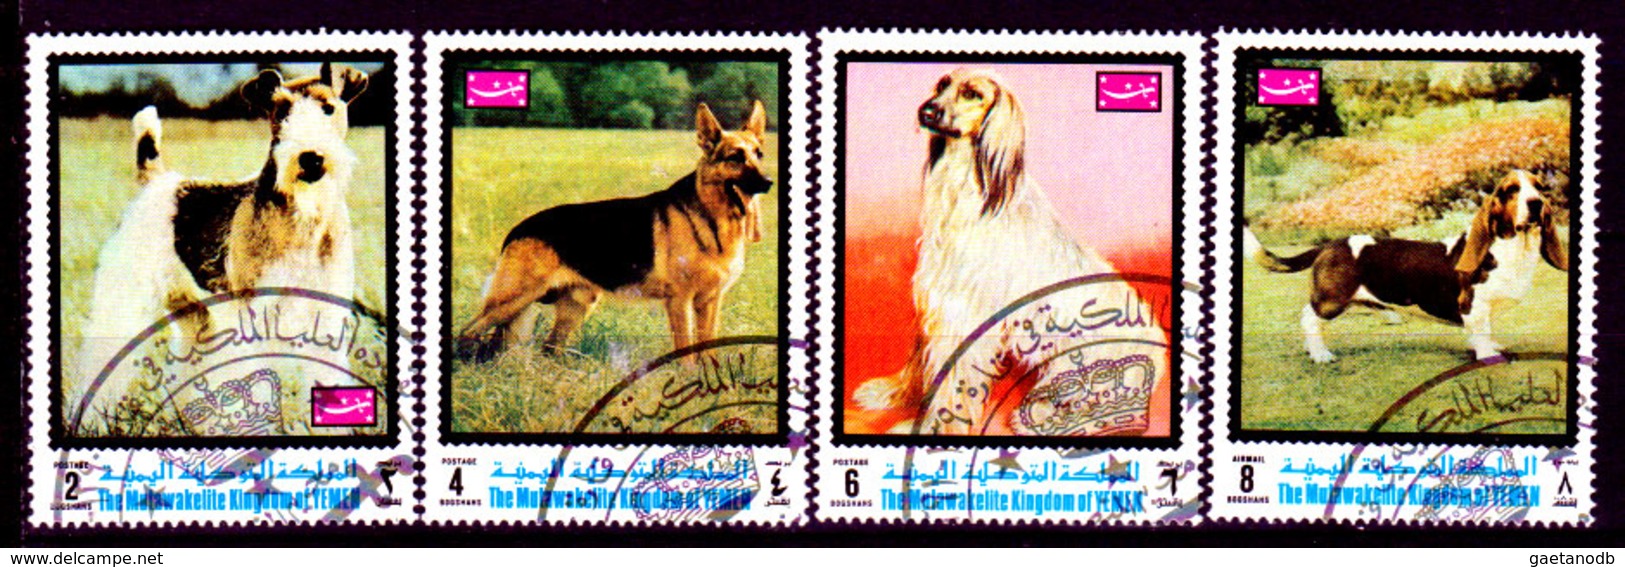 Yemen-0015 - Cani (o) Used - Senza Difetti Occulti. - Jemen